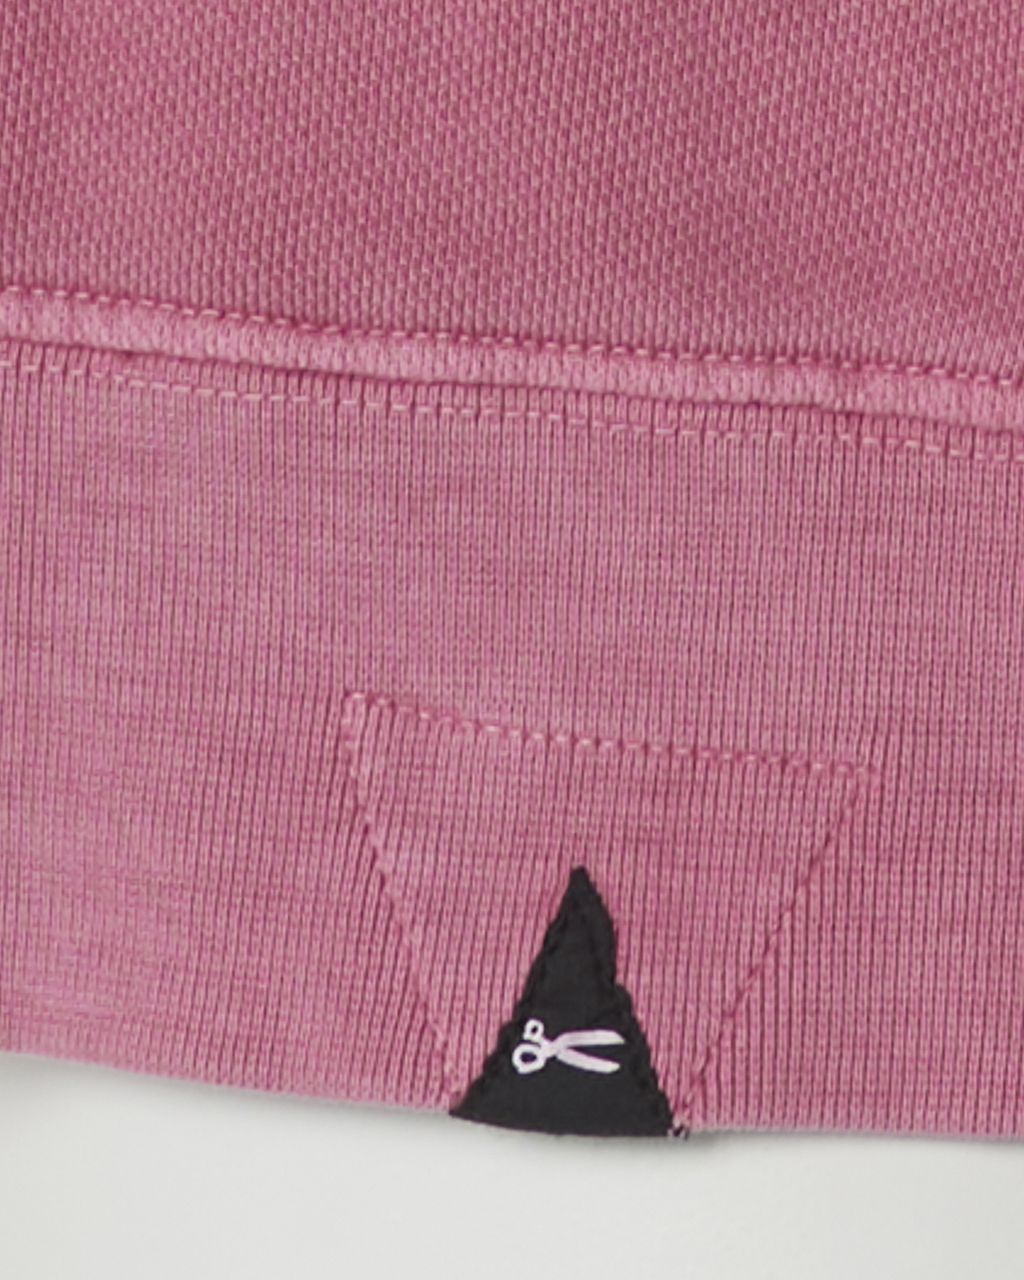 DENHAM Applique Sweater Roze 075814-001-L